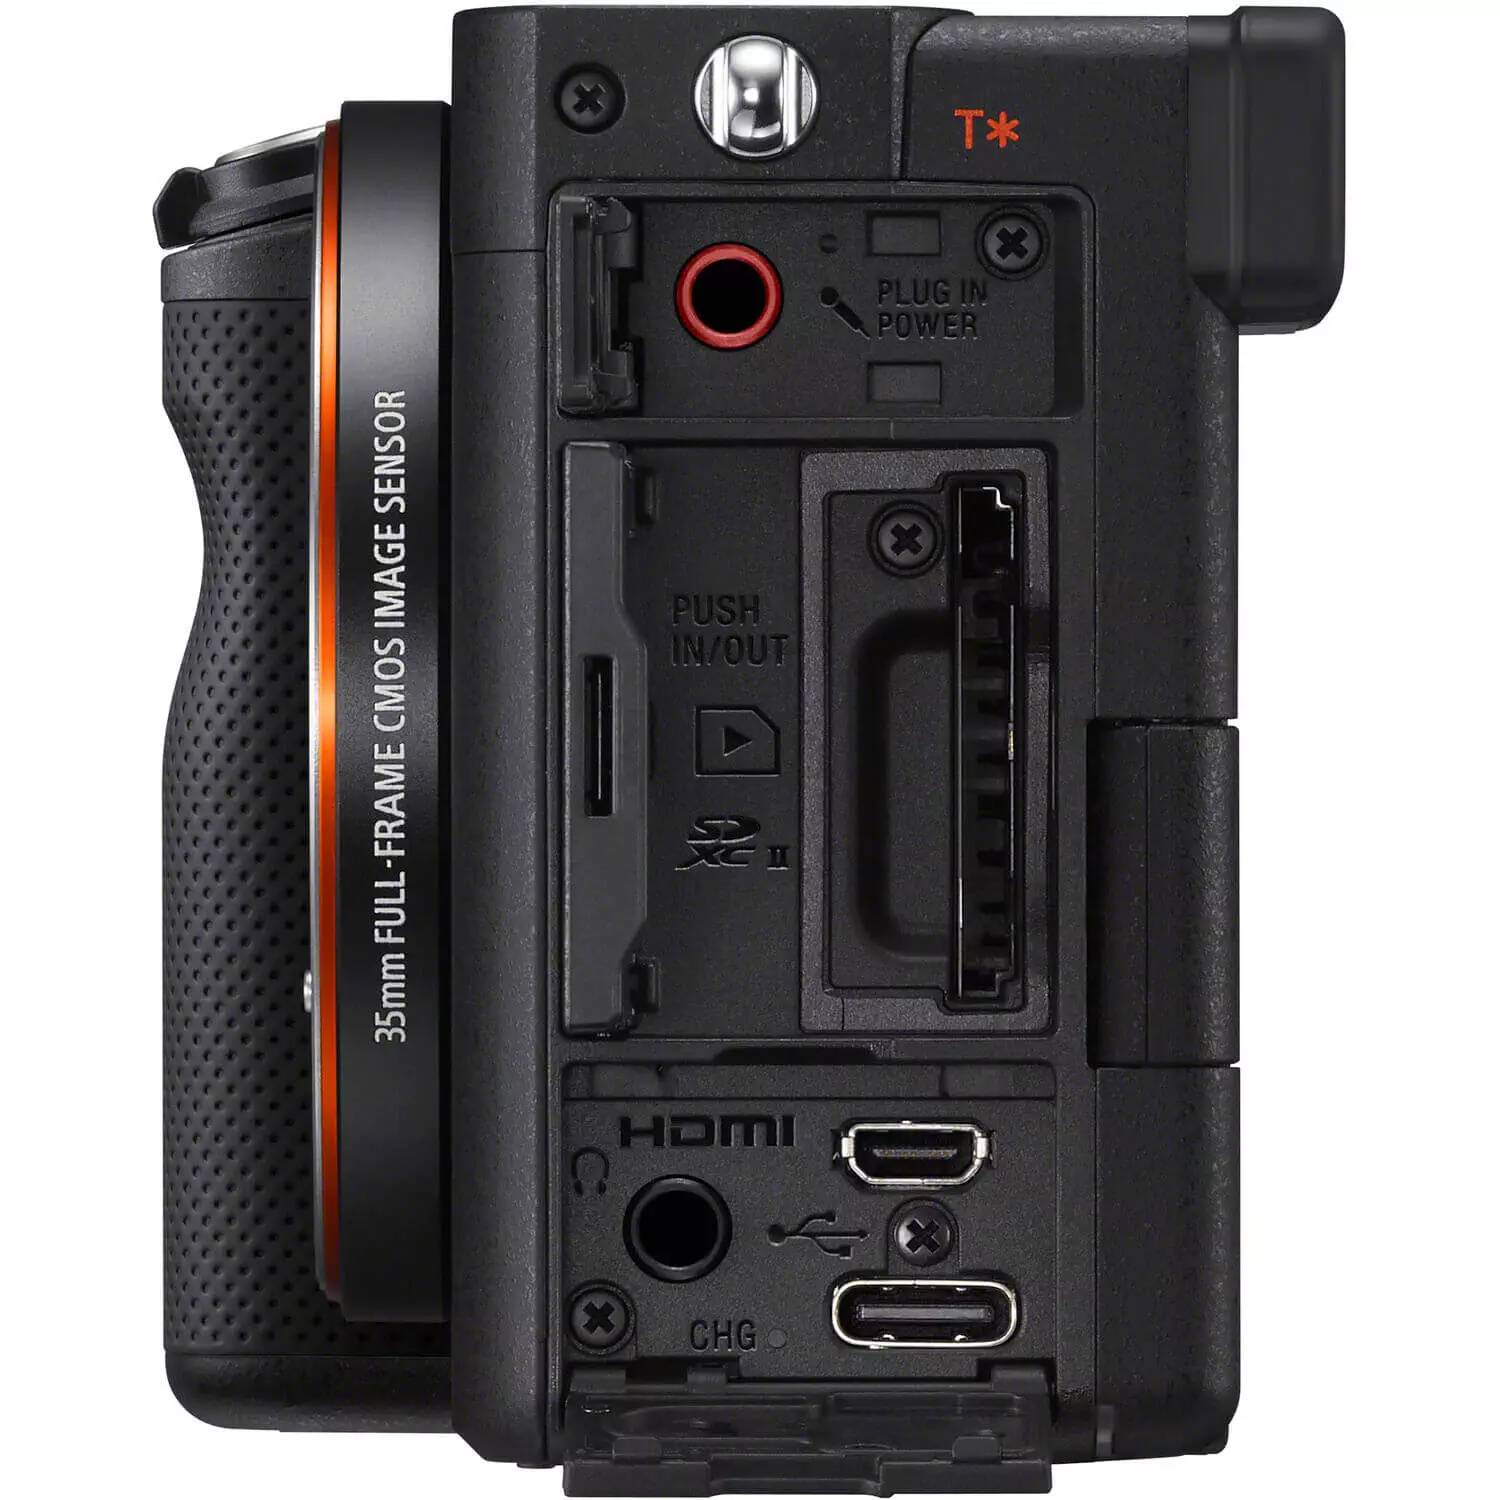 Sony Alpha a7C Mirrorless Digital Camera Body Only